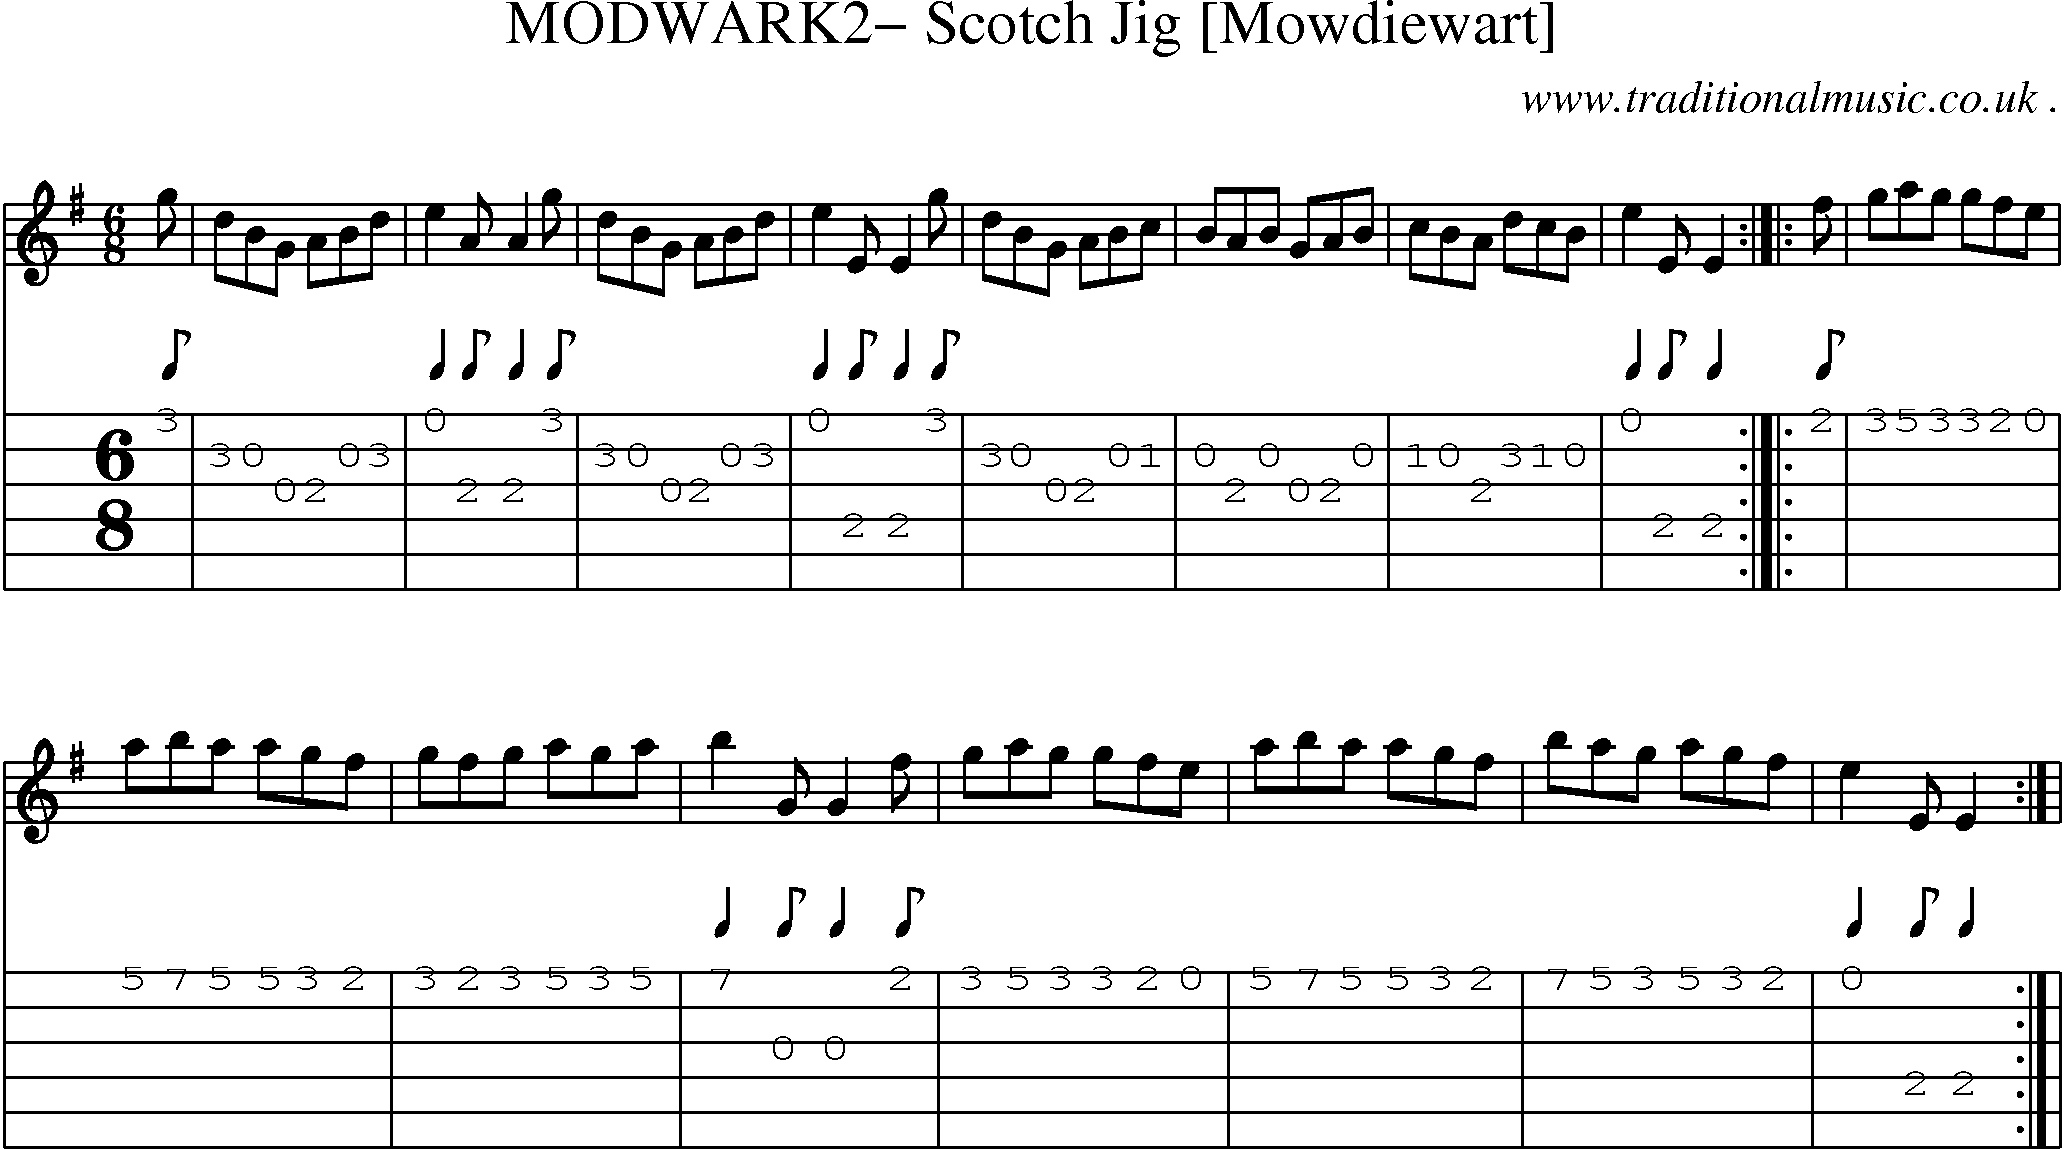 Sheet-Music and Guitar Tabs for Modwark2 Scotch Jig